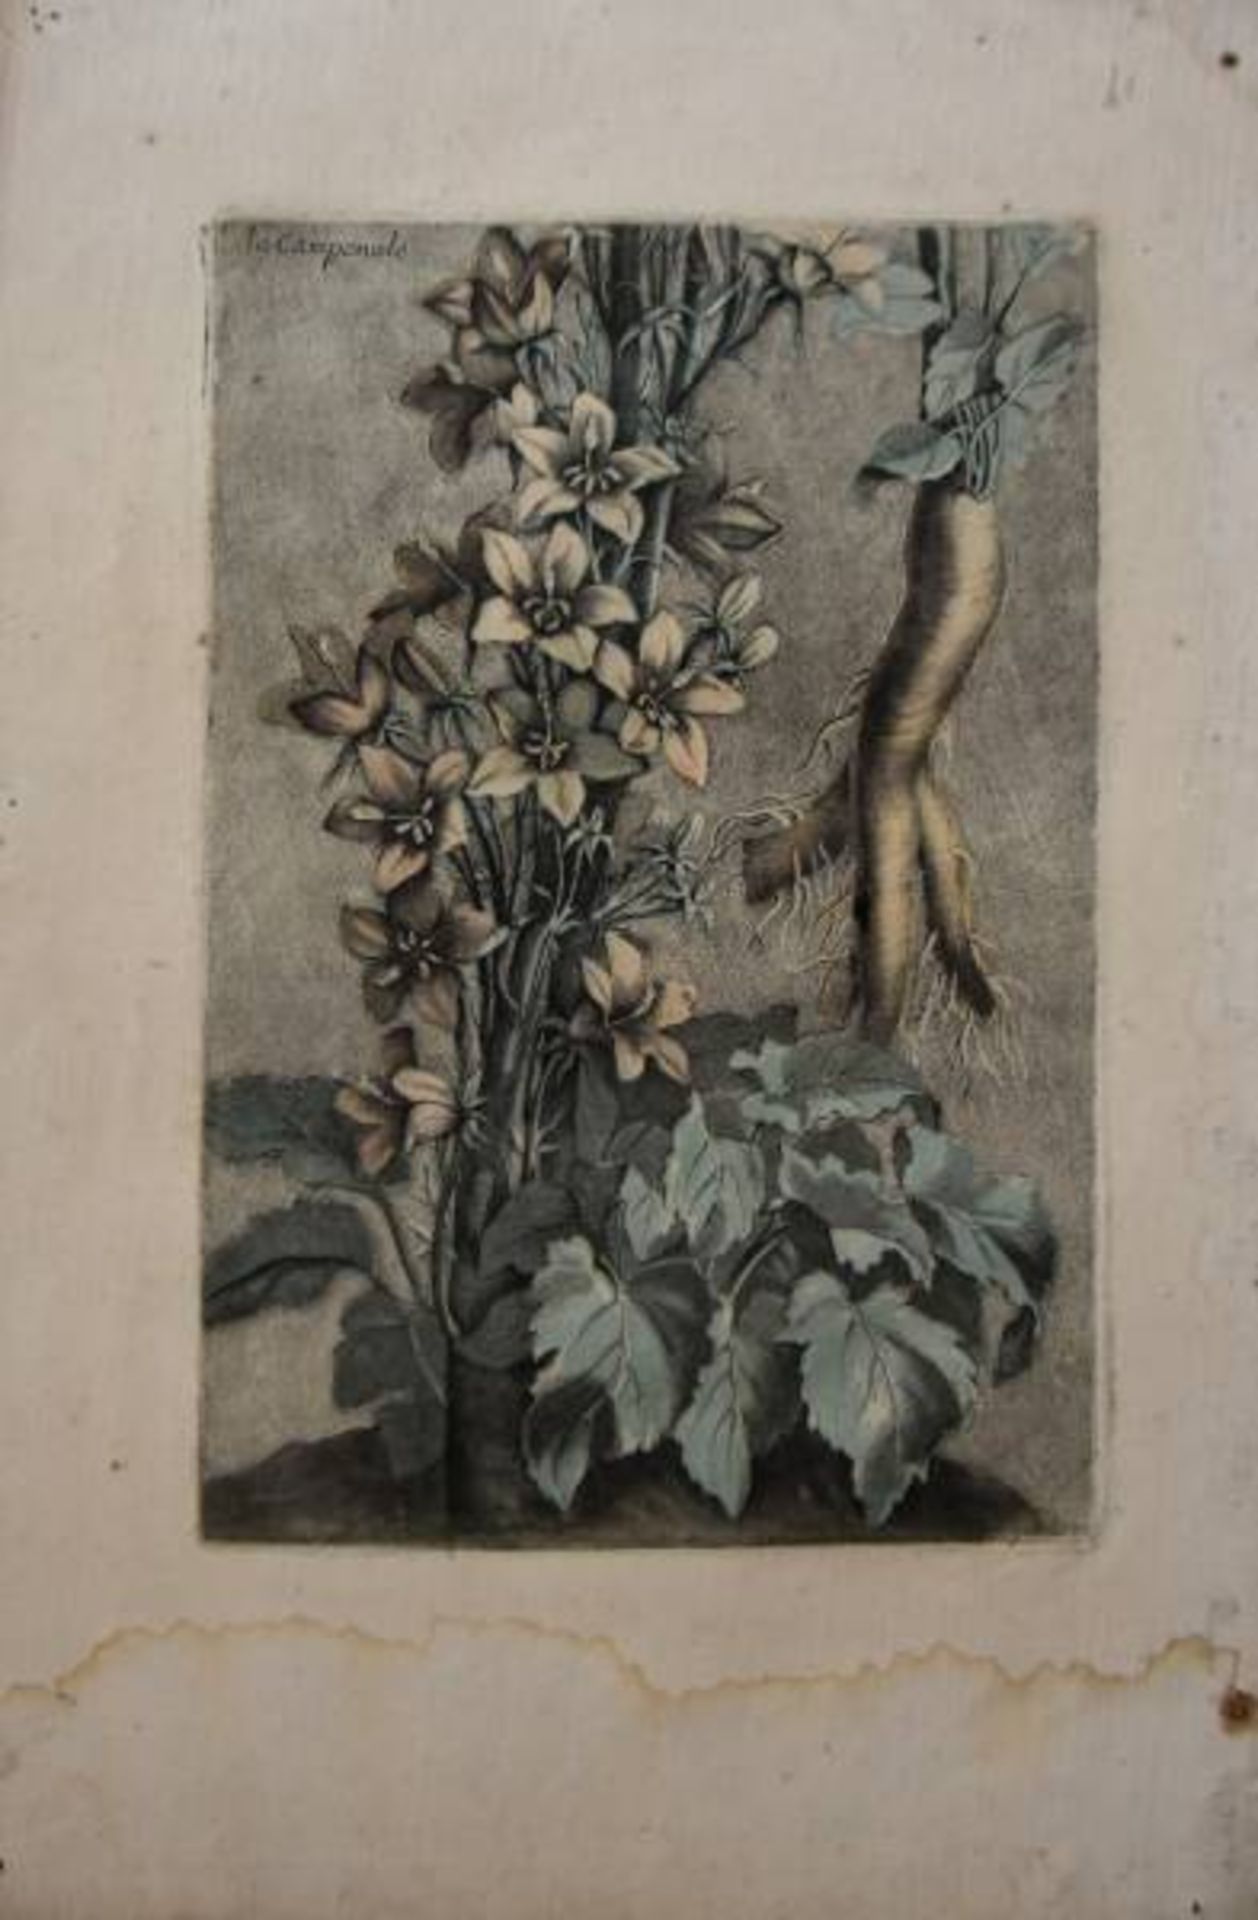 BOTANIK "La Companule", kolorierter Kupferstich, rechts unten signiert "Gautier", wohl 18.BOTANIK " - Image 2 of 3